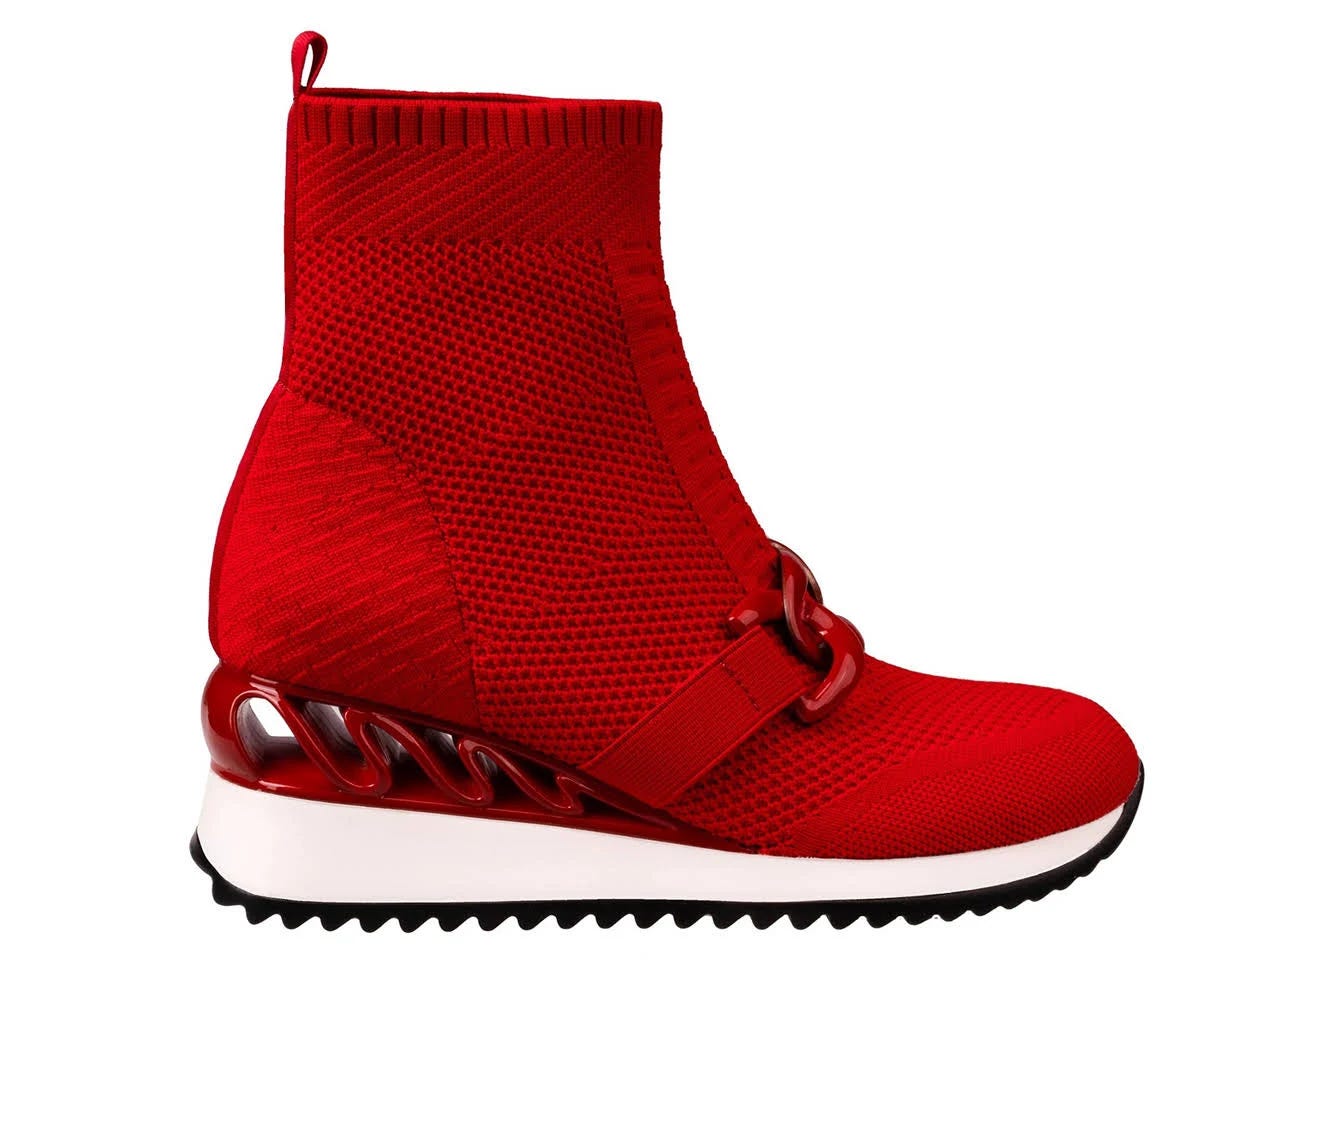 Alluring Red Sneaker Booties for Women | Image